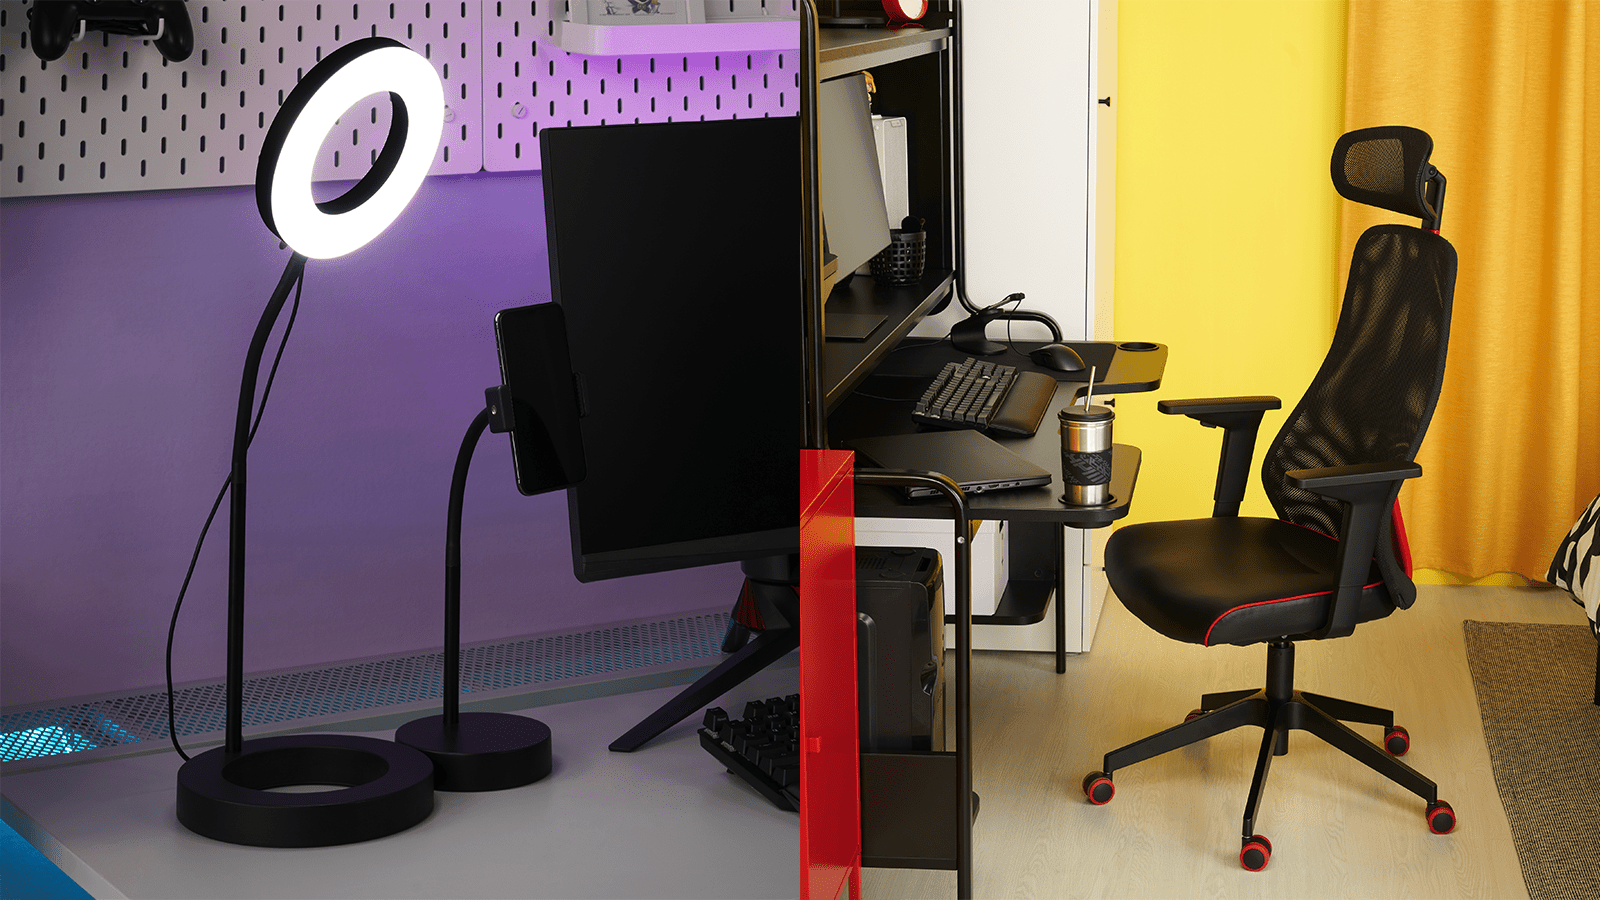 Garis “Gamer Gear” Ikea bersih dan minimalis, tanpa RGB yang terlihat